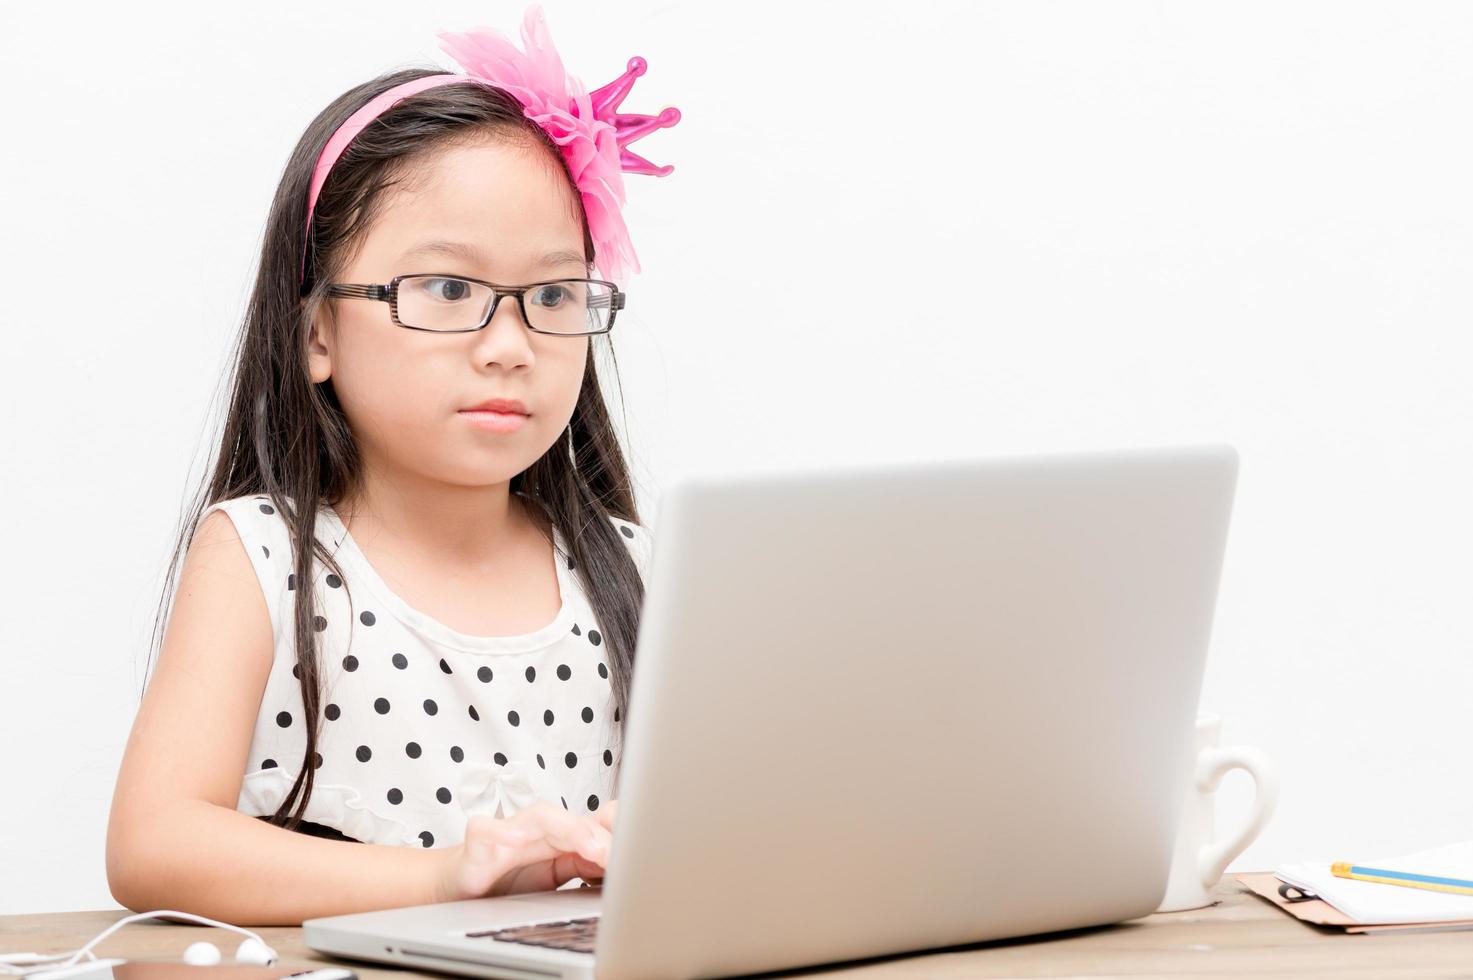 linda niña jugar computadora en blanco antecedentes foto